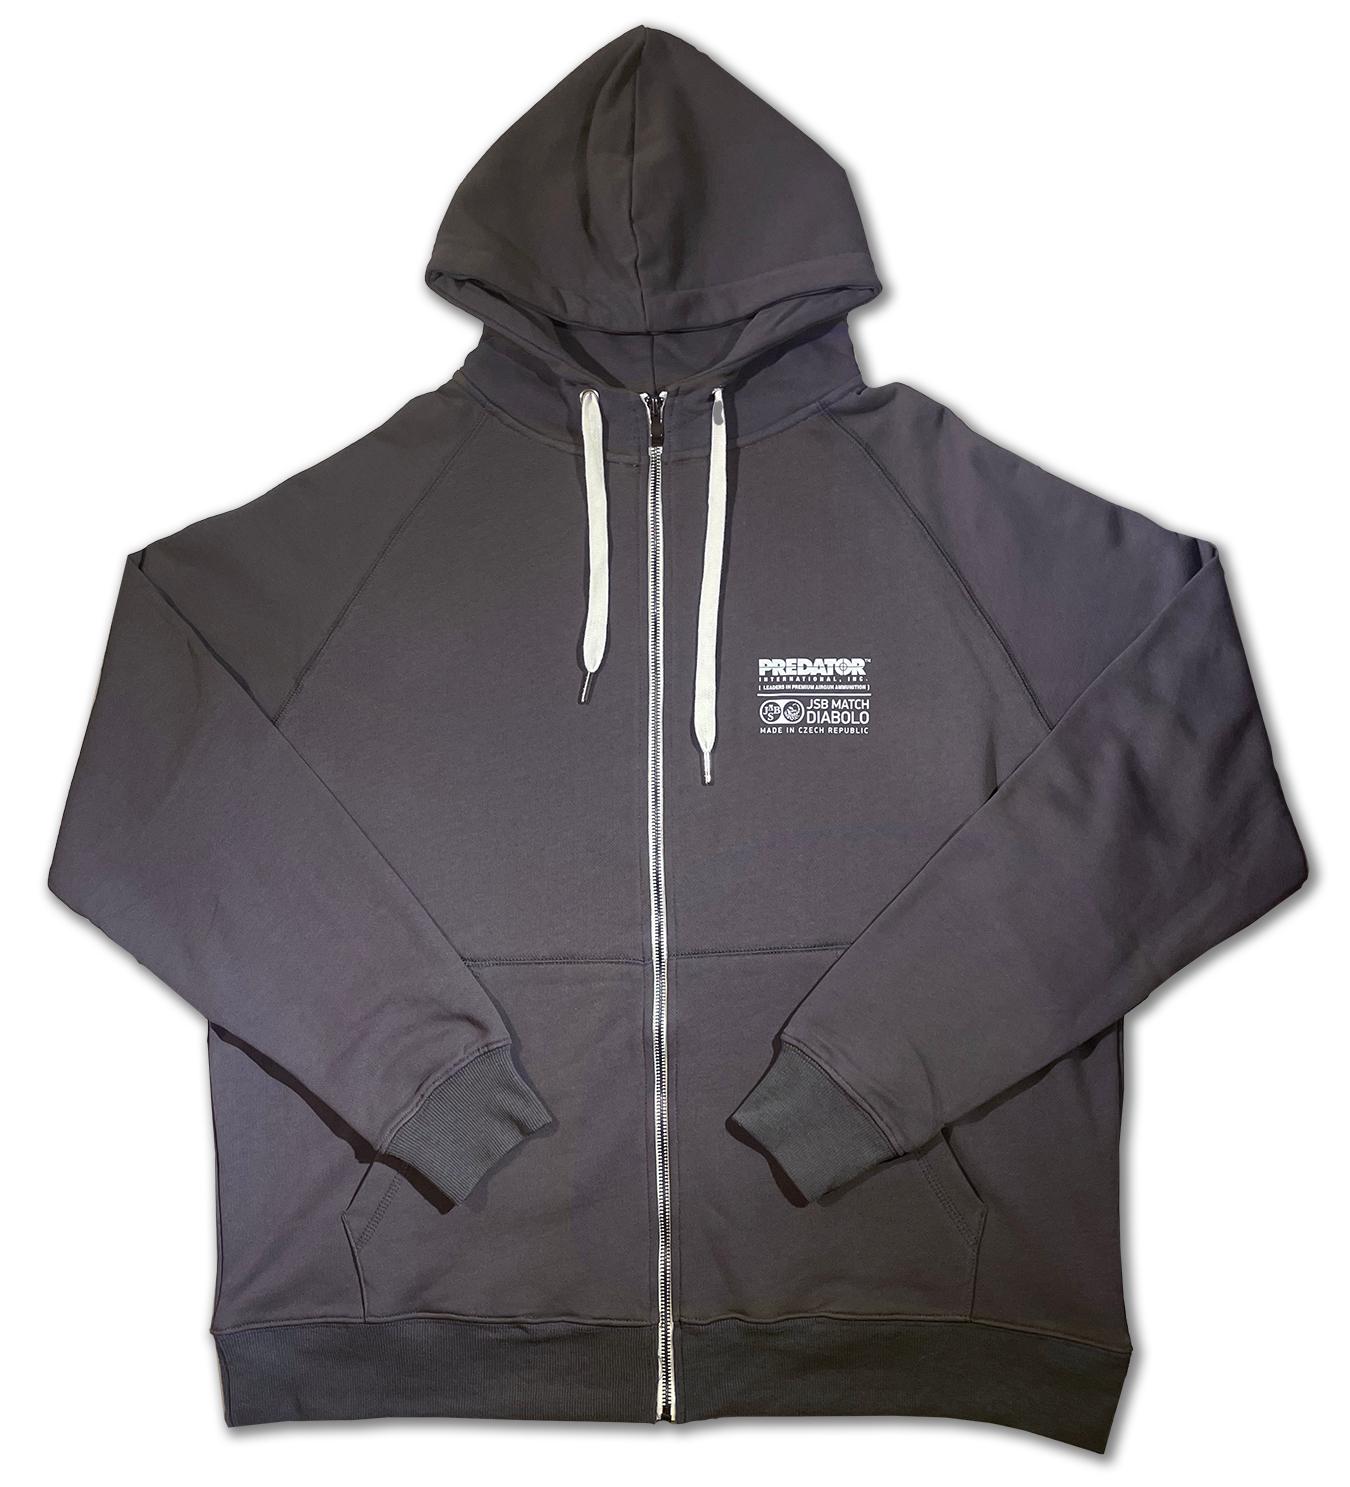 JSB Predator Hooded Sweatshirt All Cotton with Zipper, Grey, XXL